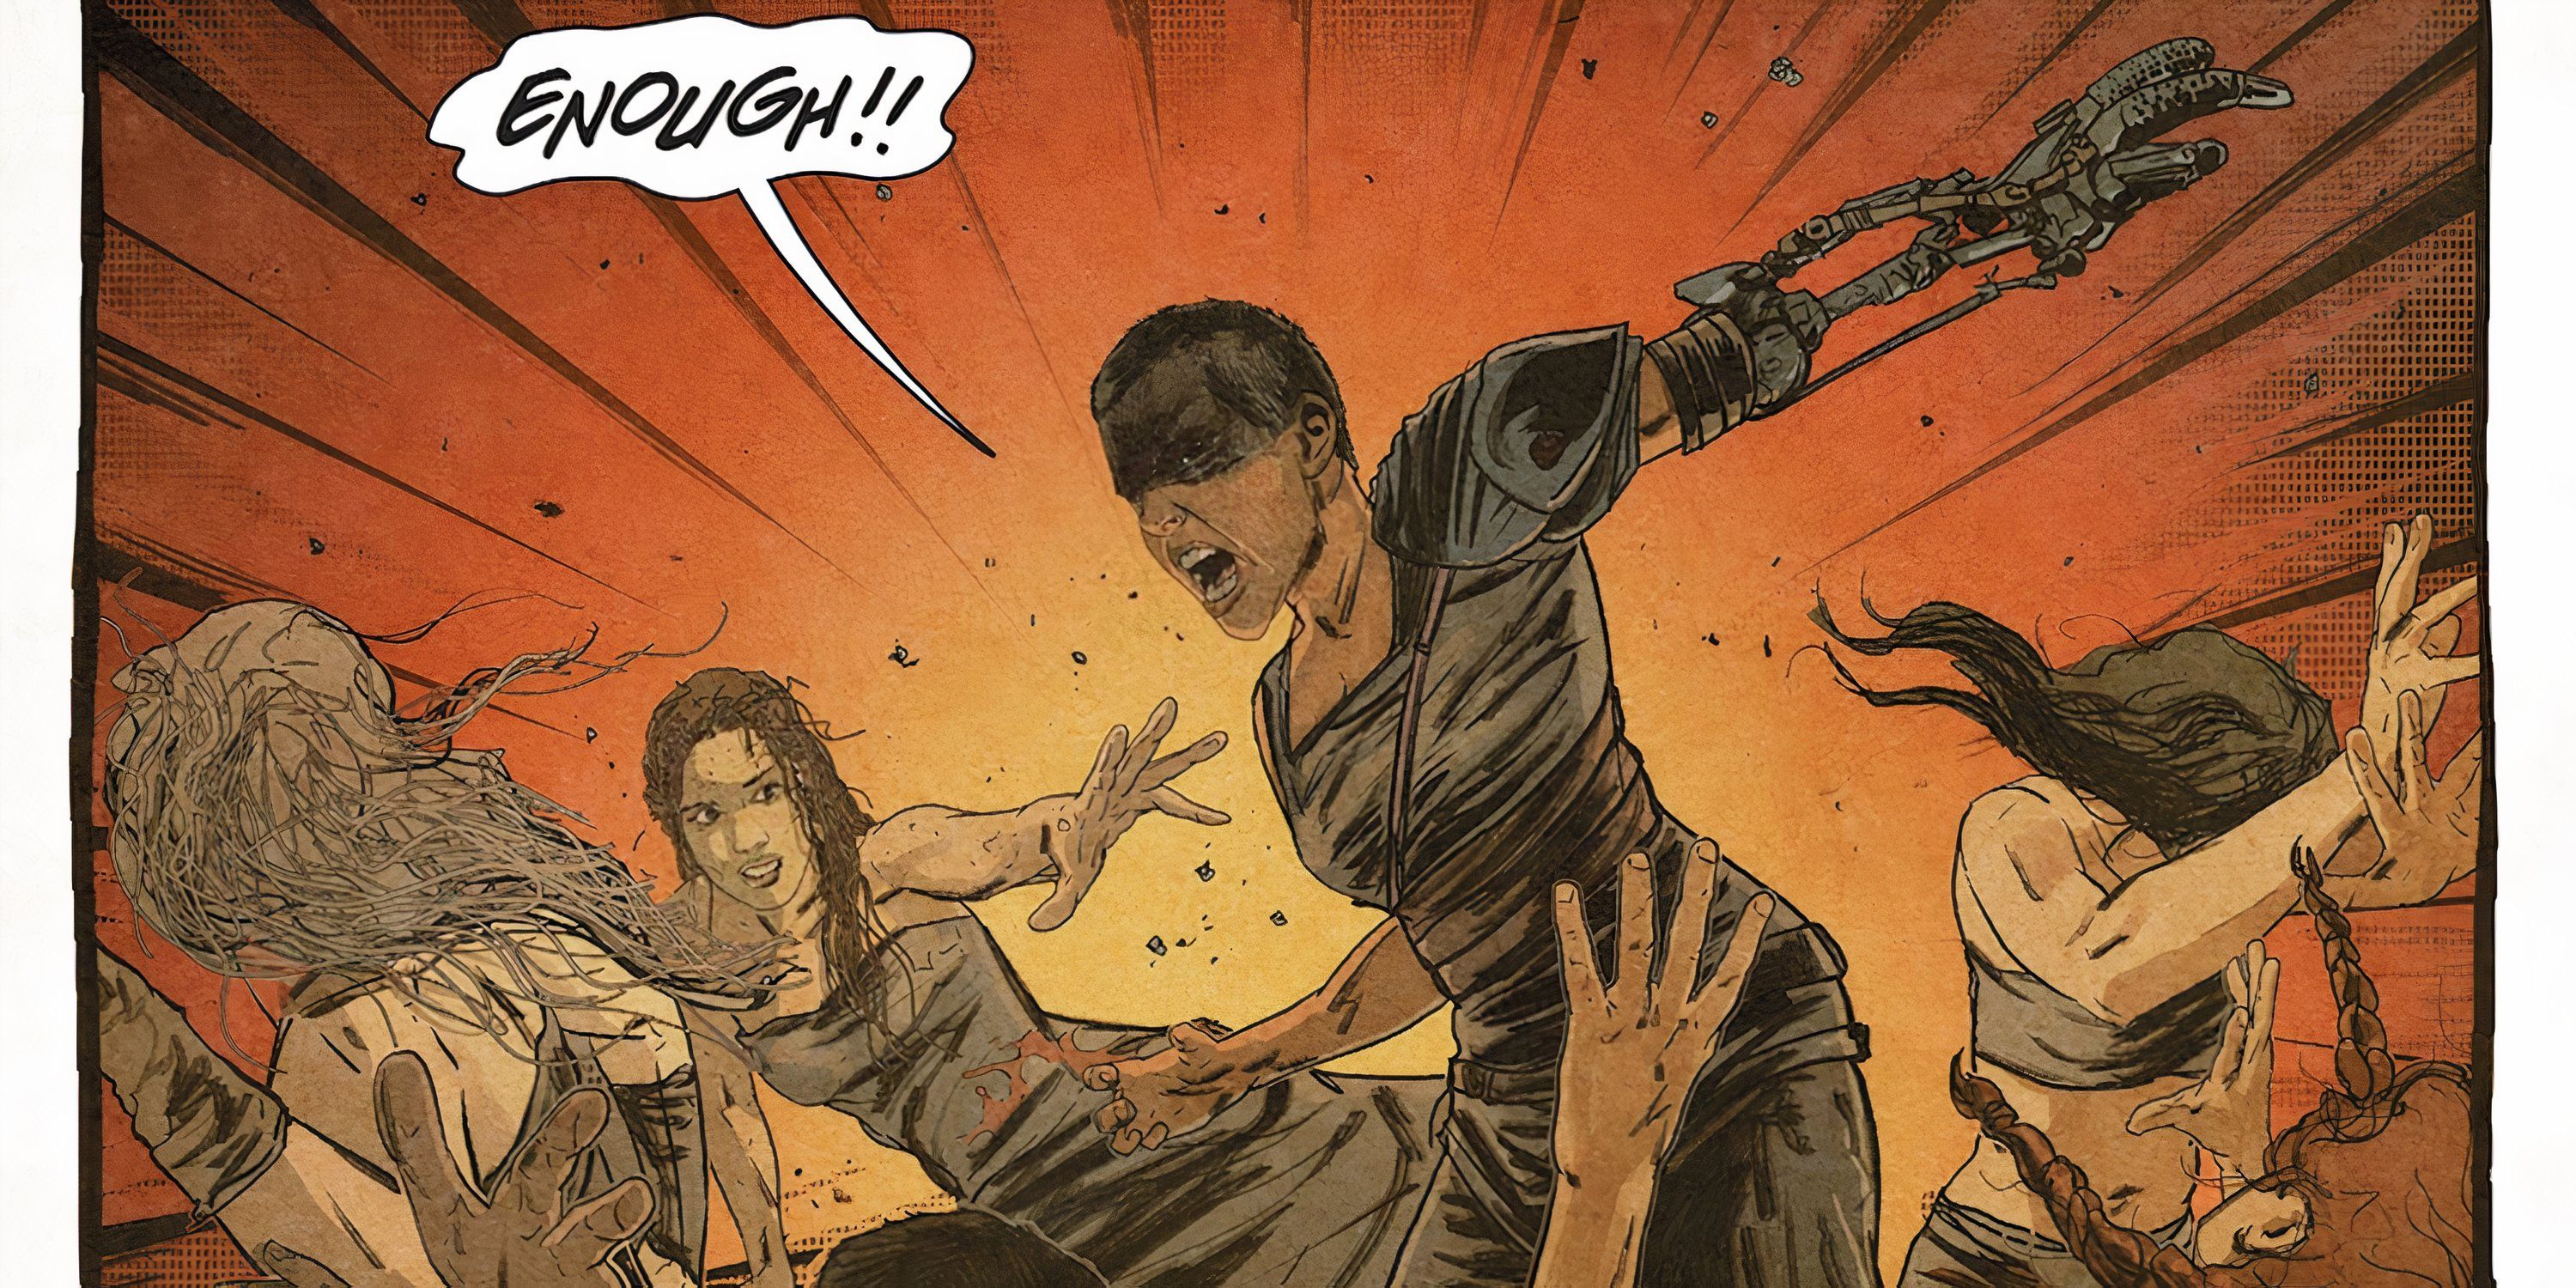 Furiosa lashes out at Immortan Joe's wives in the Mad Max: Fury Road comic.